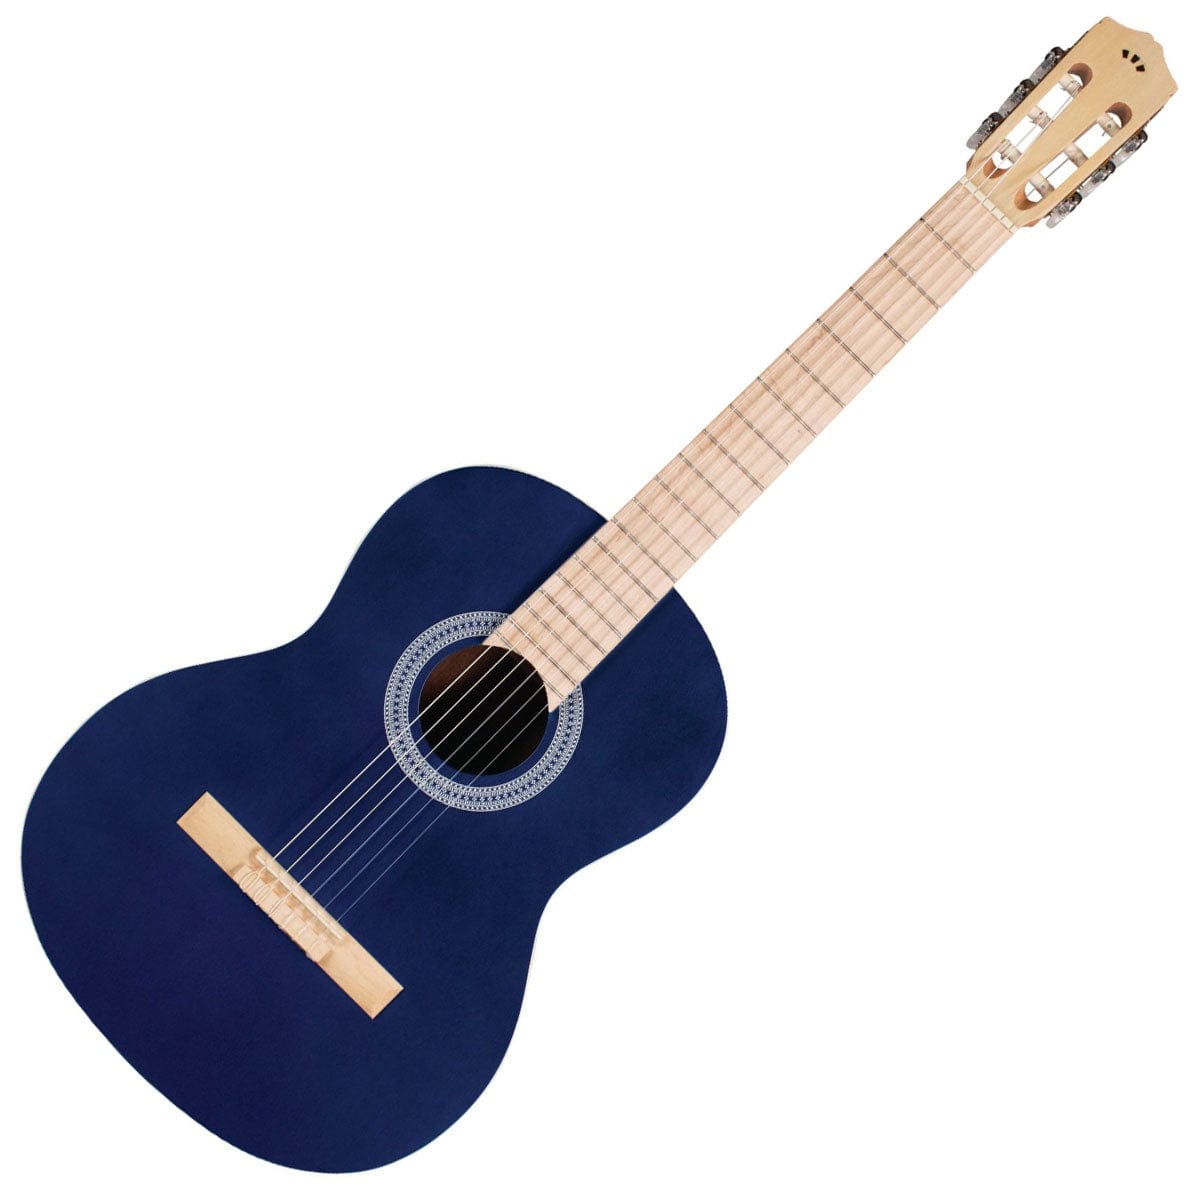 Cordoba Guitar Cordoba - Protege C1 Matiz 4/4 Classical Guitar SP/MH w/Bag - Classic Blue - Byron Music